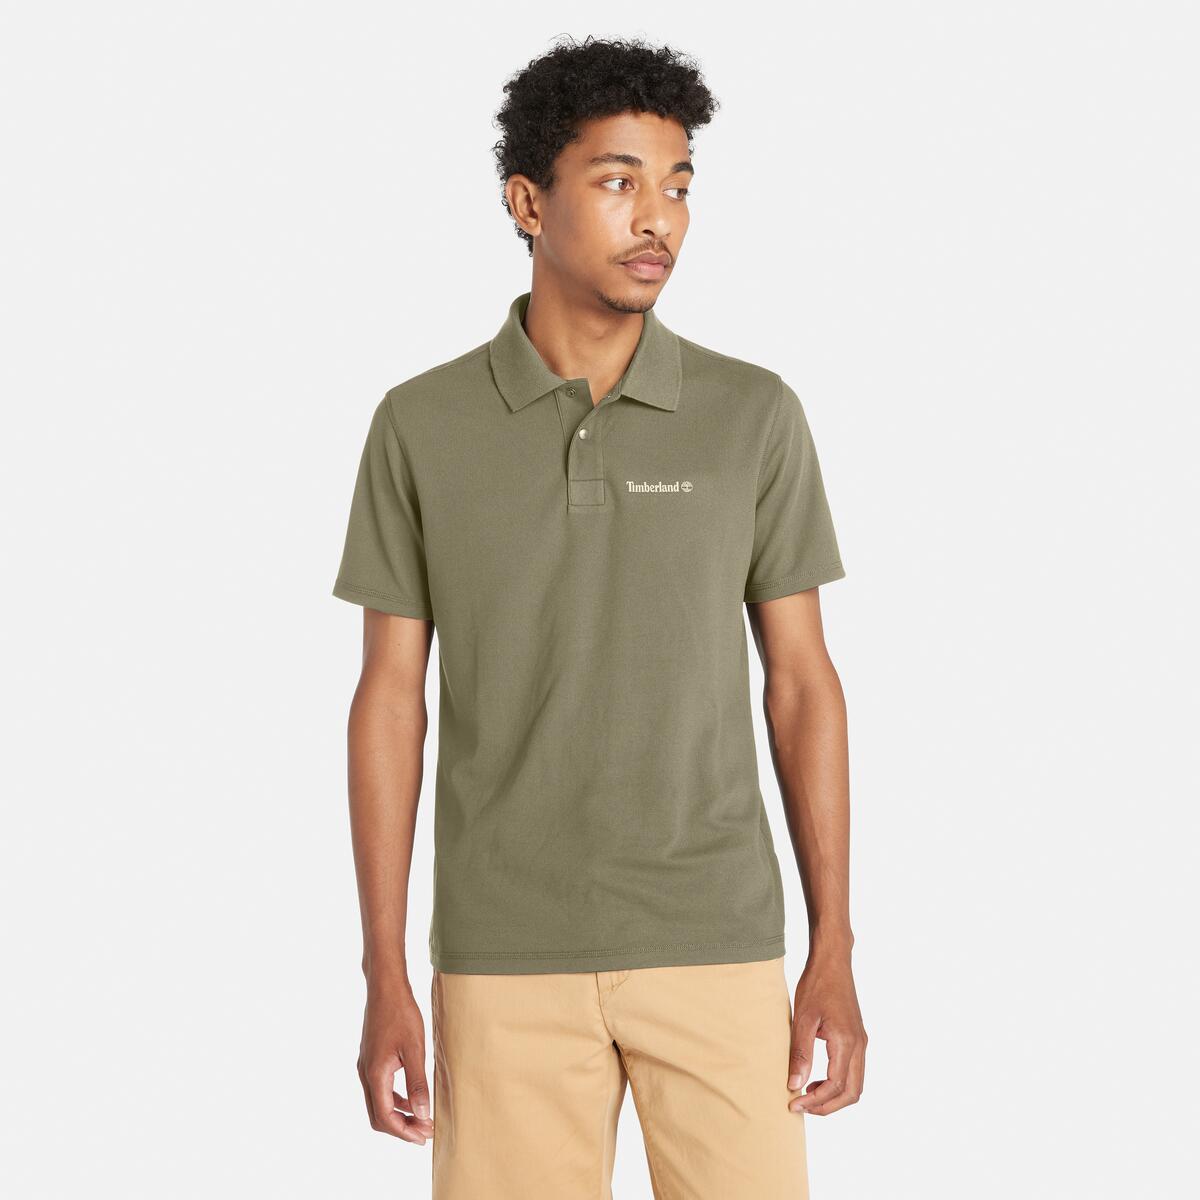 Men's Multi Purpose Short Sleeve Polo Shirt - Timberland - Singapore